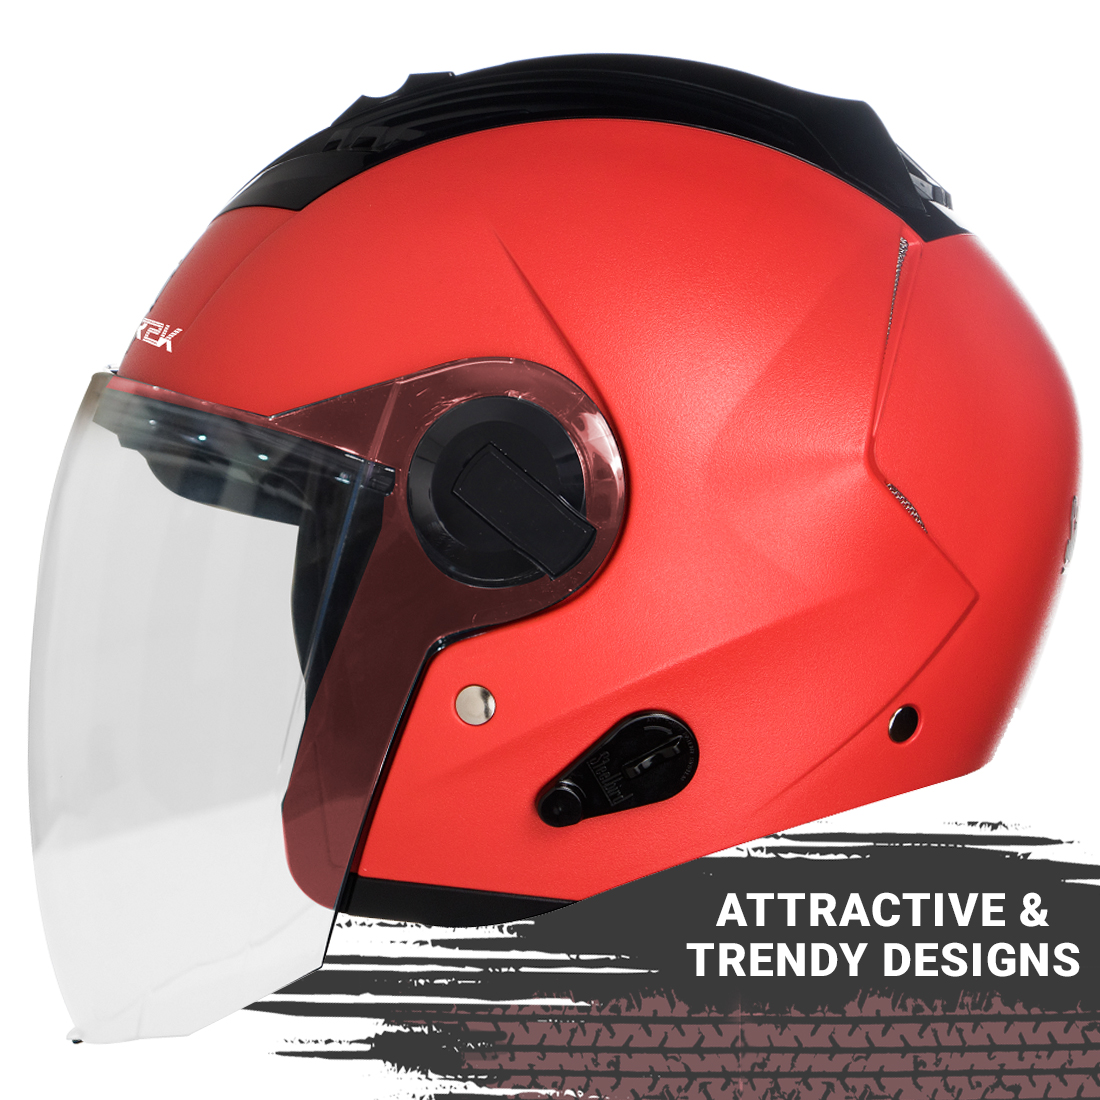 Steelbird SBA-3 R2K Classic Open Face Helmet (Red With Clear Visor)